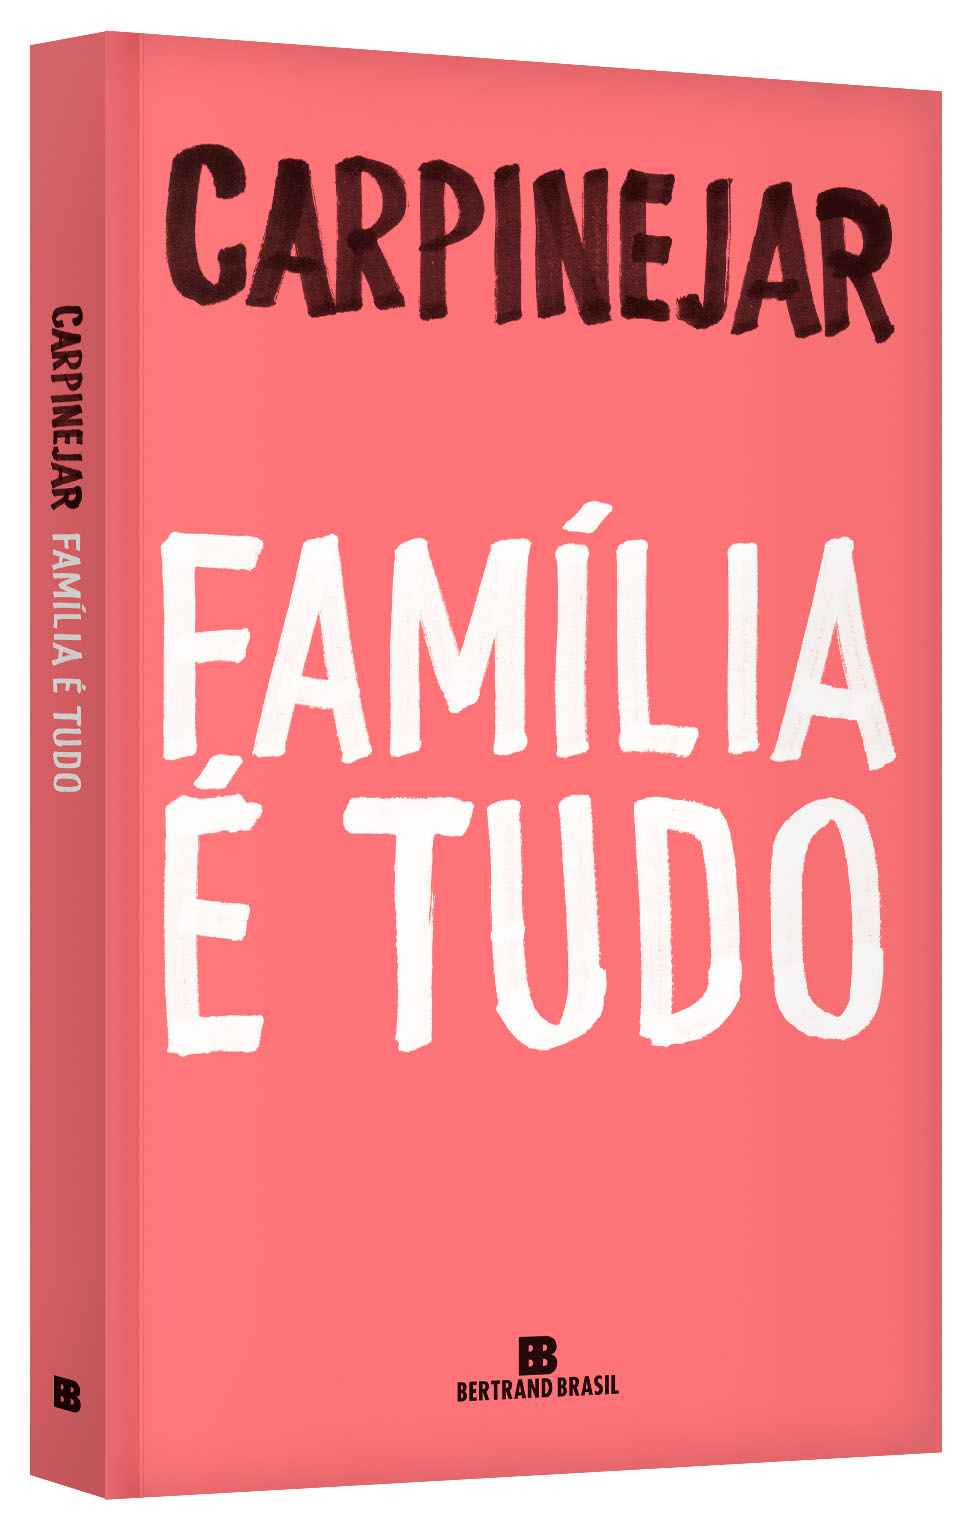 Editora Bertrand Brasil